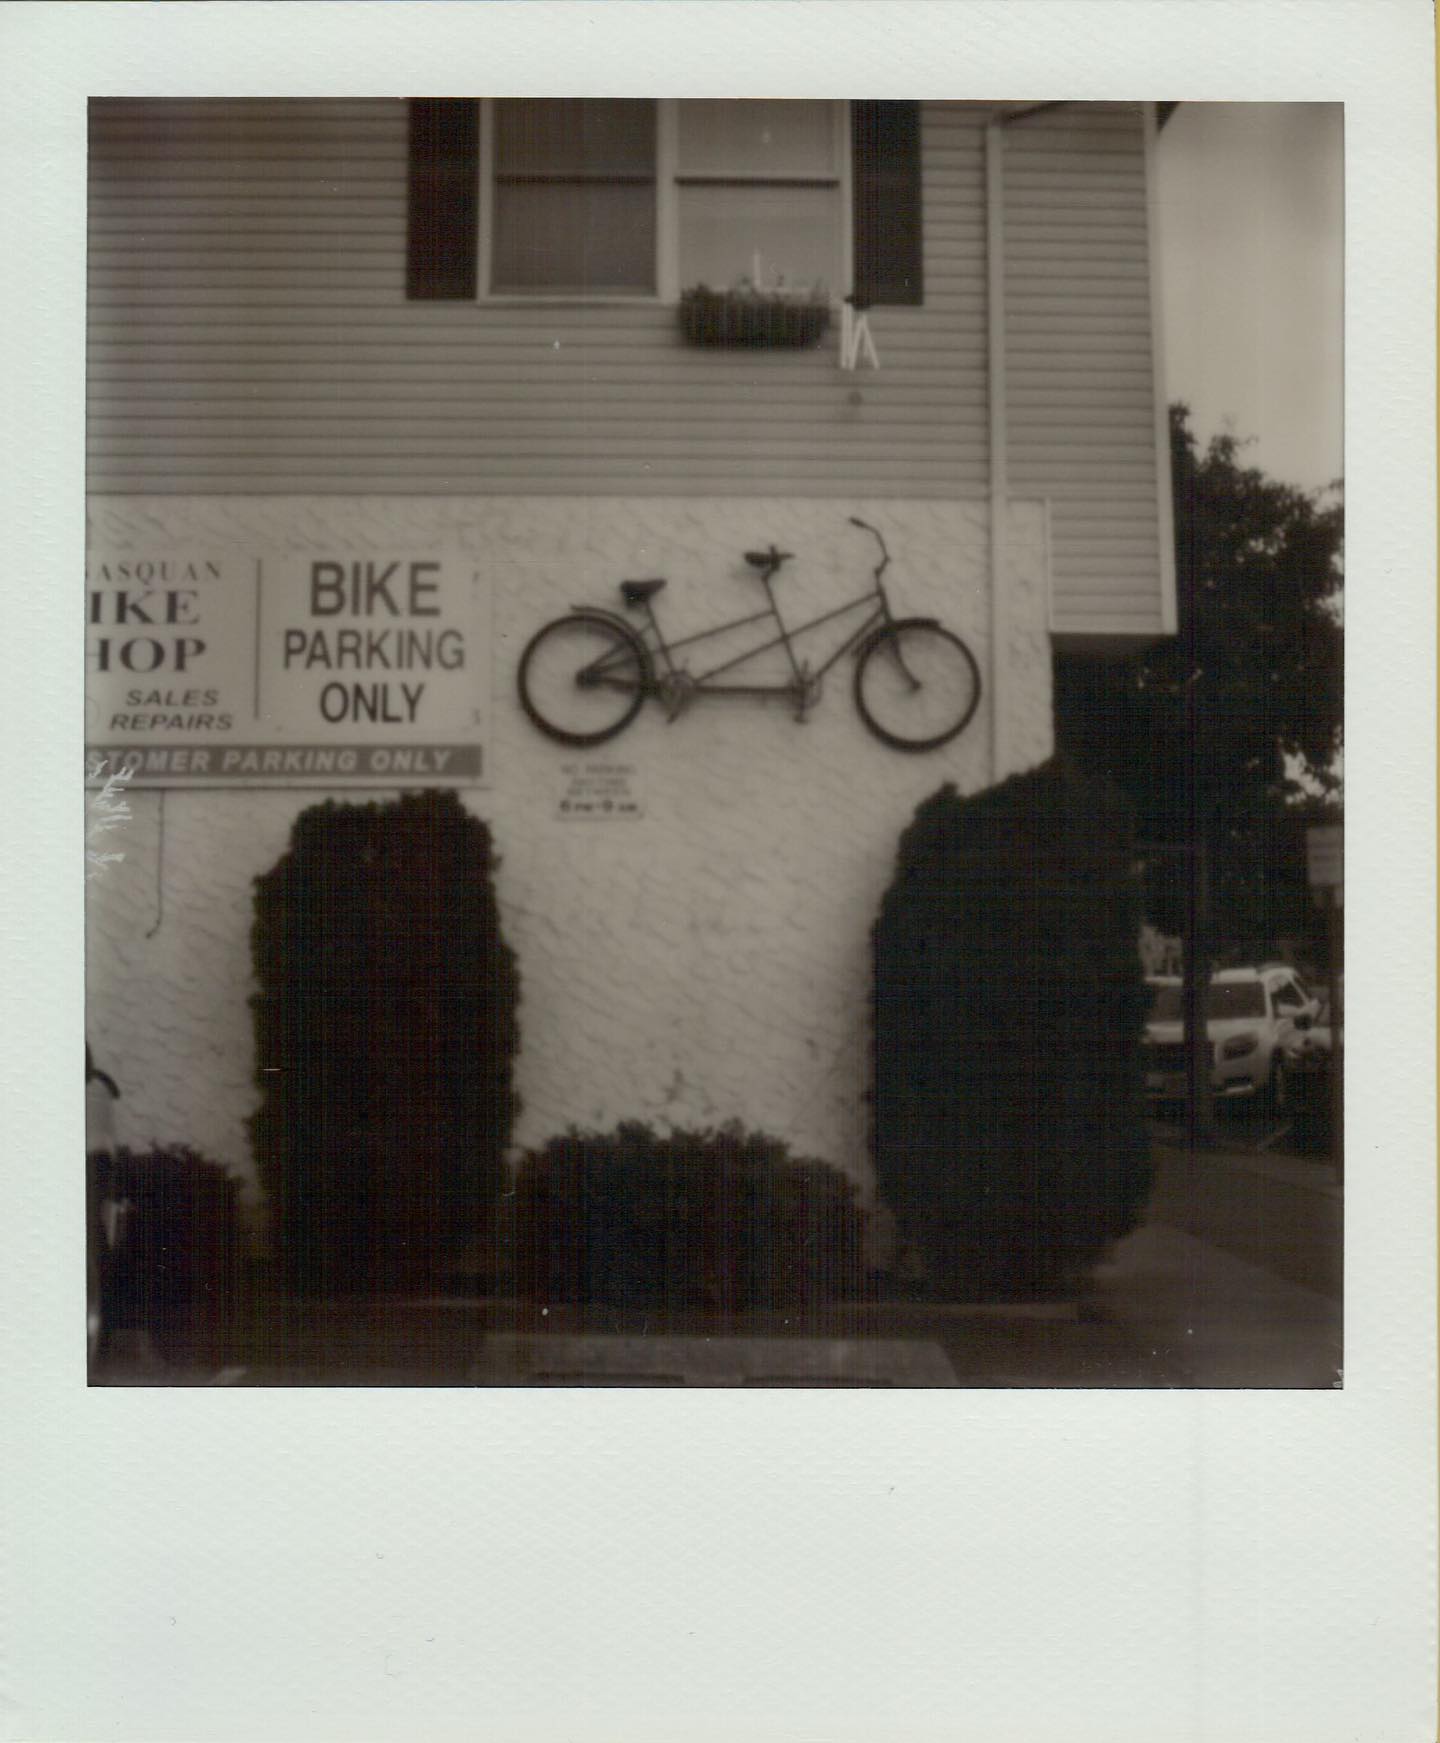 Bike parking only. Shot with my @mintcamera SLR670 on @polaroidoriginals Black & White SX-70 Film.

#polaroid #polaroidoriginals #film #filmphotography #slr670s